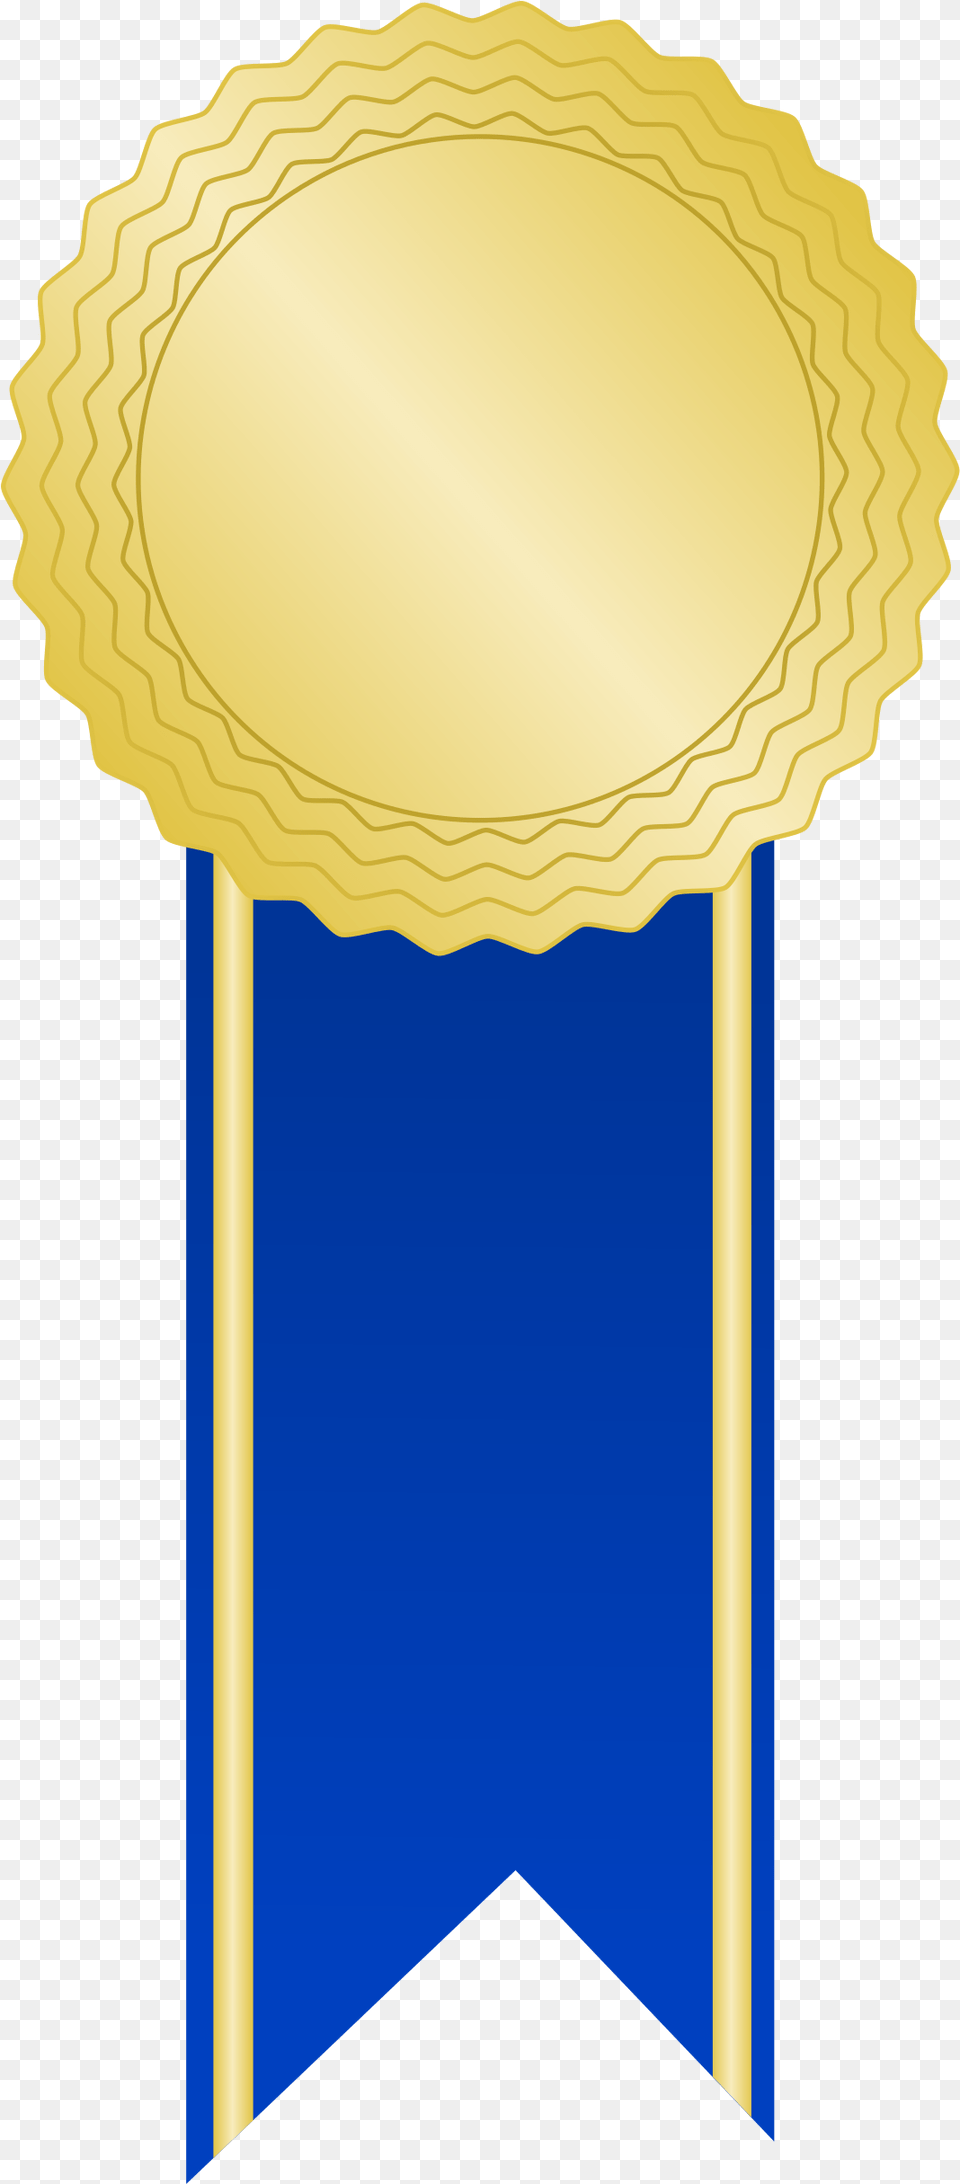 Fileinkscape Golden Award With A Blue Ribbonsvg Blue Ribbon For Award, Gold, Trophy, Gold Medal, Plate Png